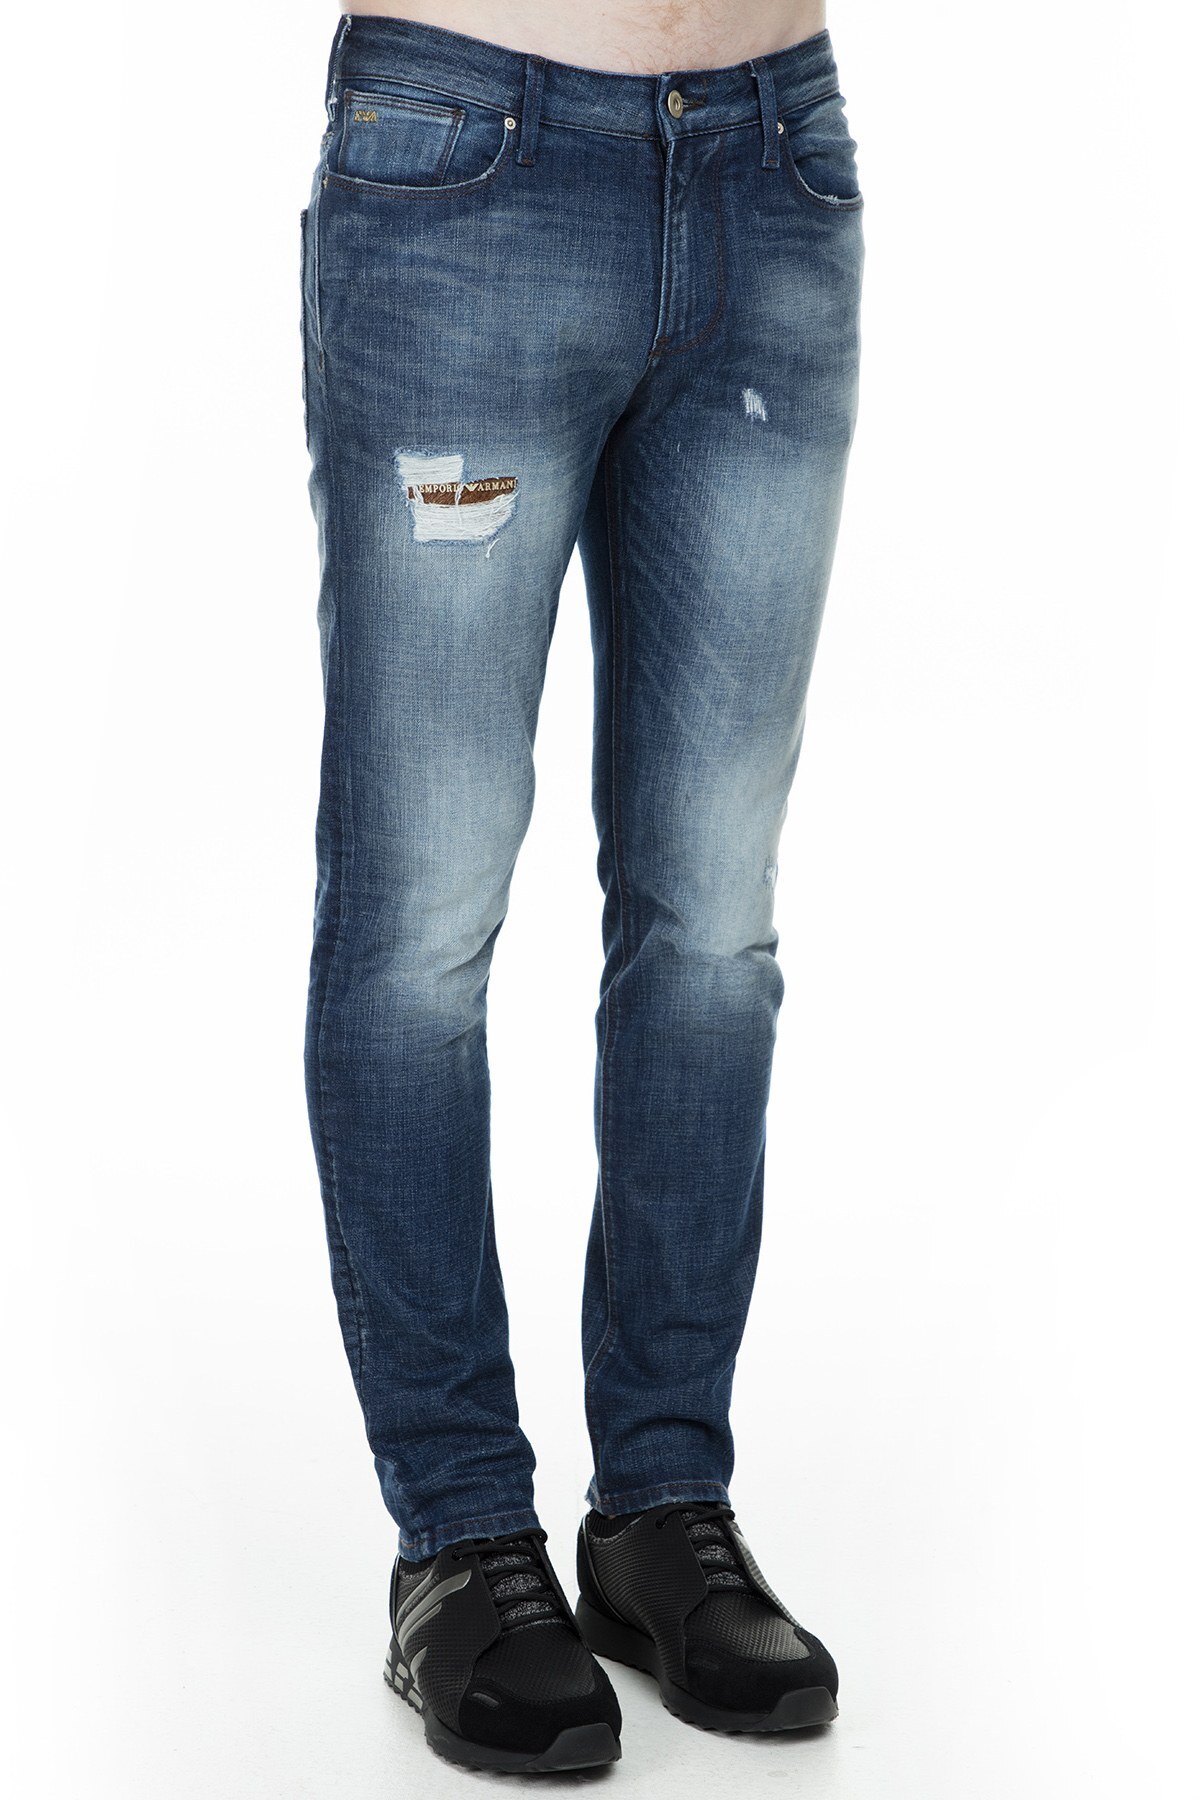 Emporio Armani J06 Jeans Erkek Kot Pantolon 6G1J06 1D6YZ 0941 LACİVERT